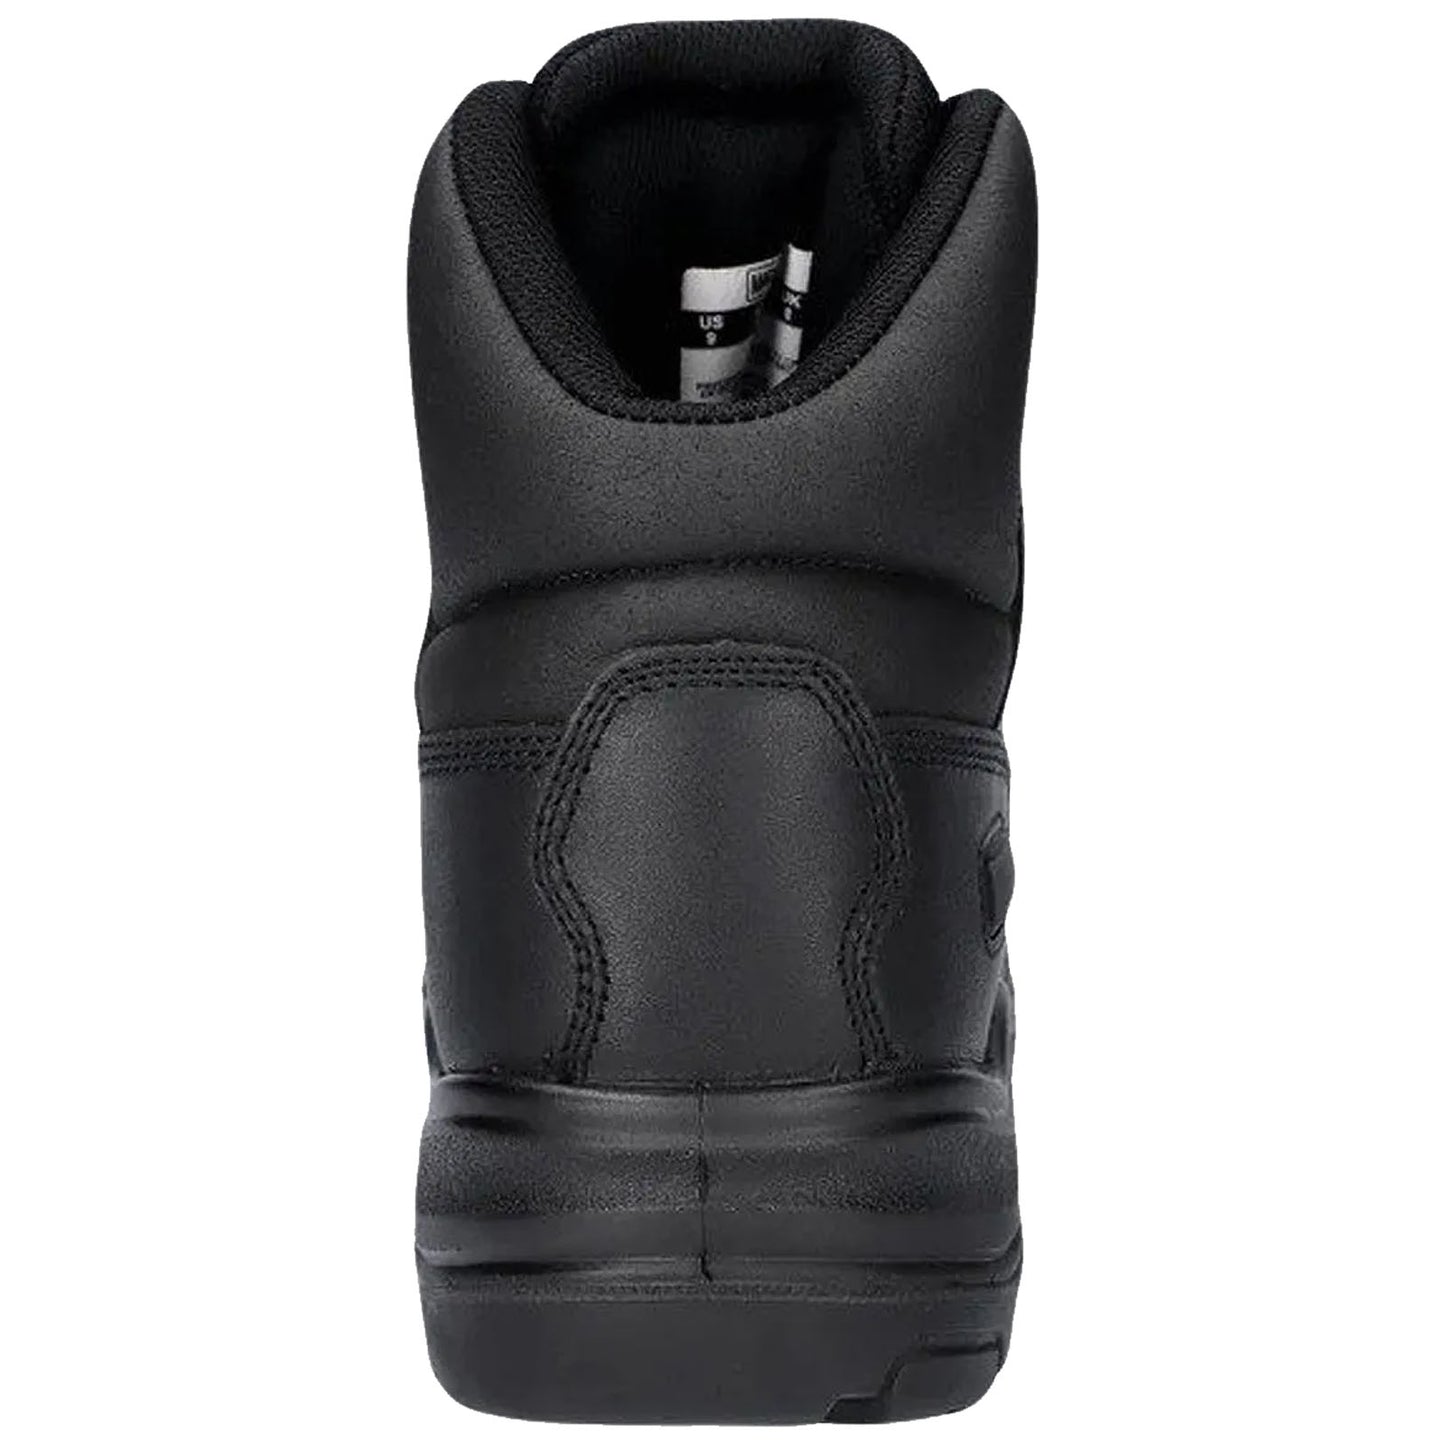 Magnum Unisex Precision Sitemaster Uniform S3 Safety Boots